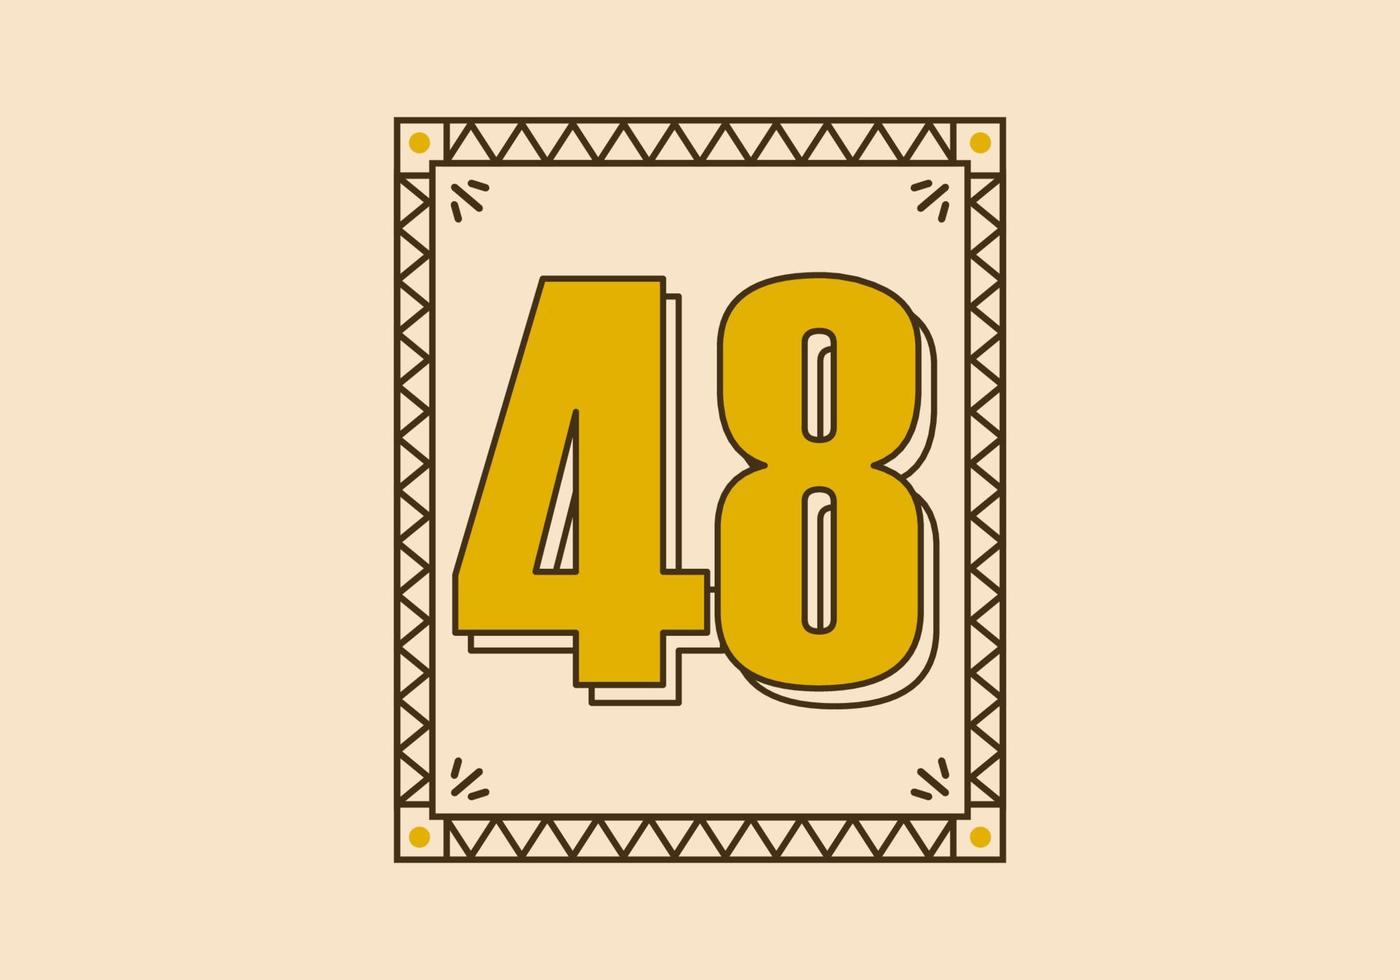 årgång rektangel ram med siffra 48 på den vektor